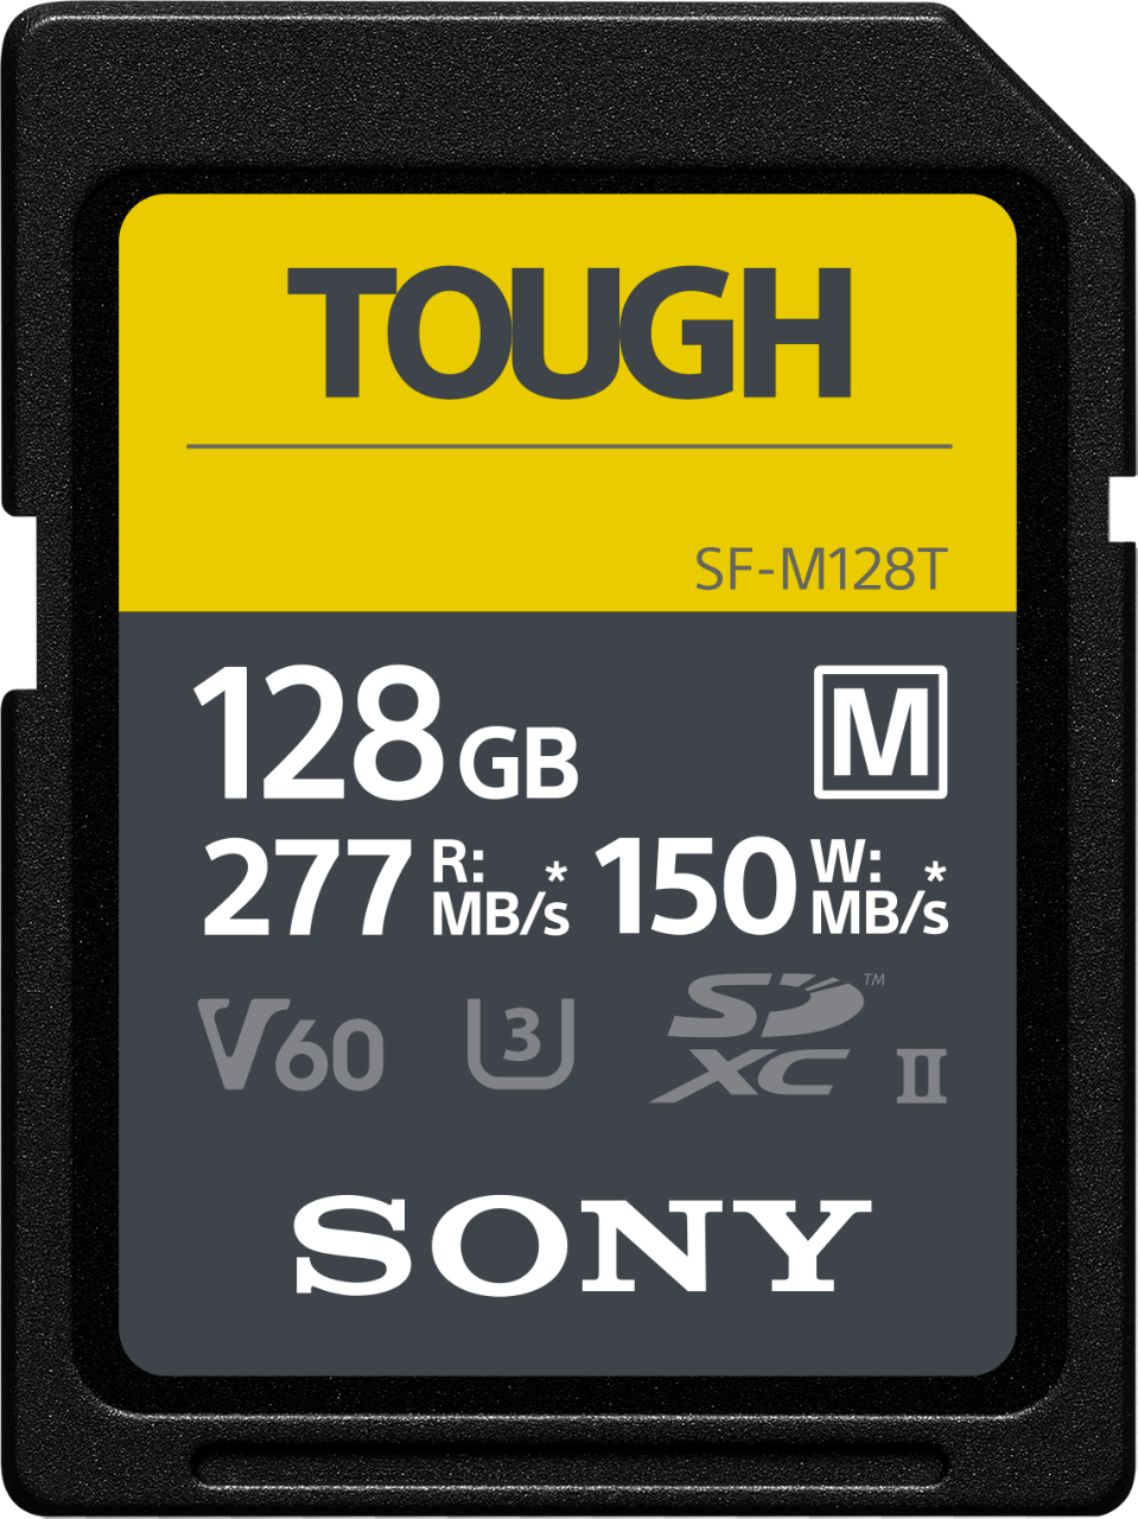 Sony TOUGH M Series 128GB SDXC UHS-II Memory Card 